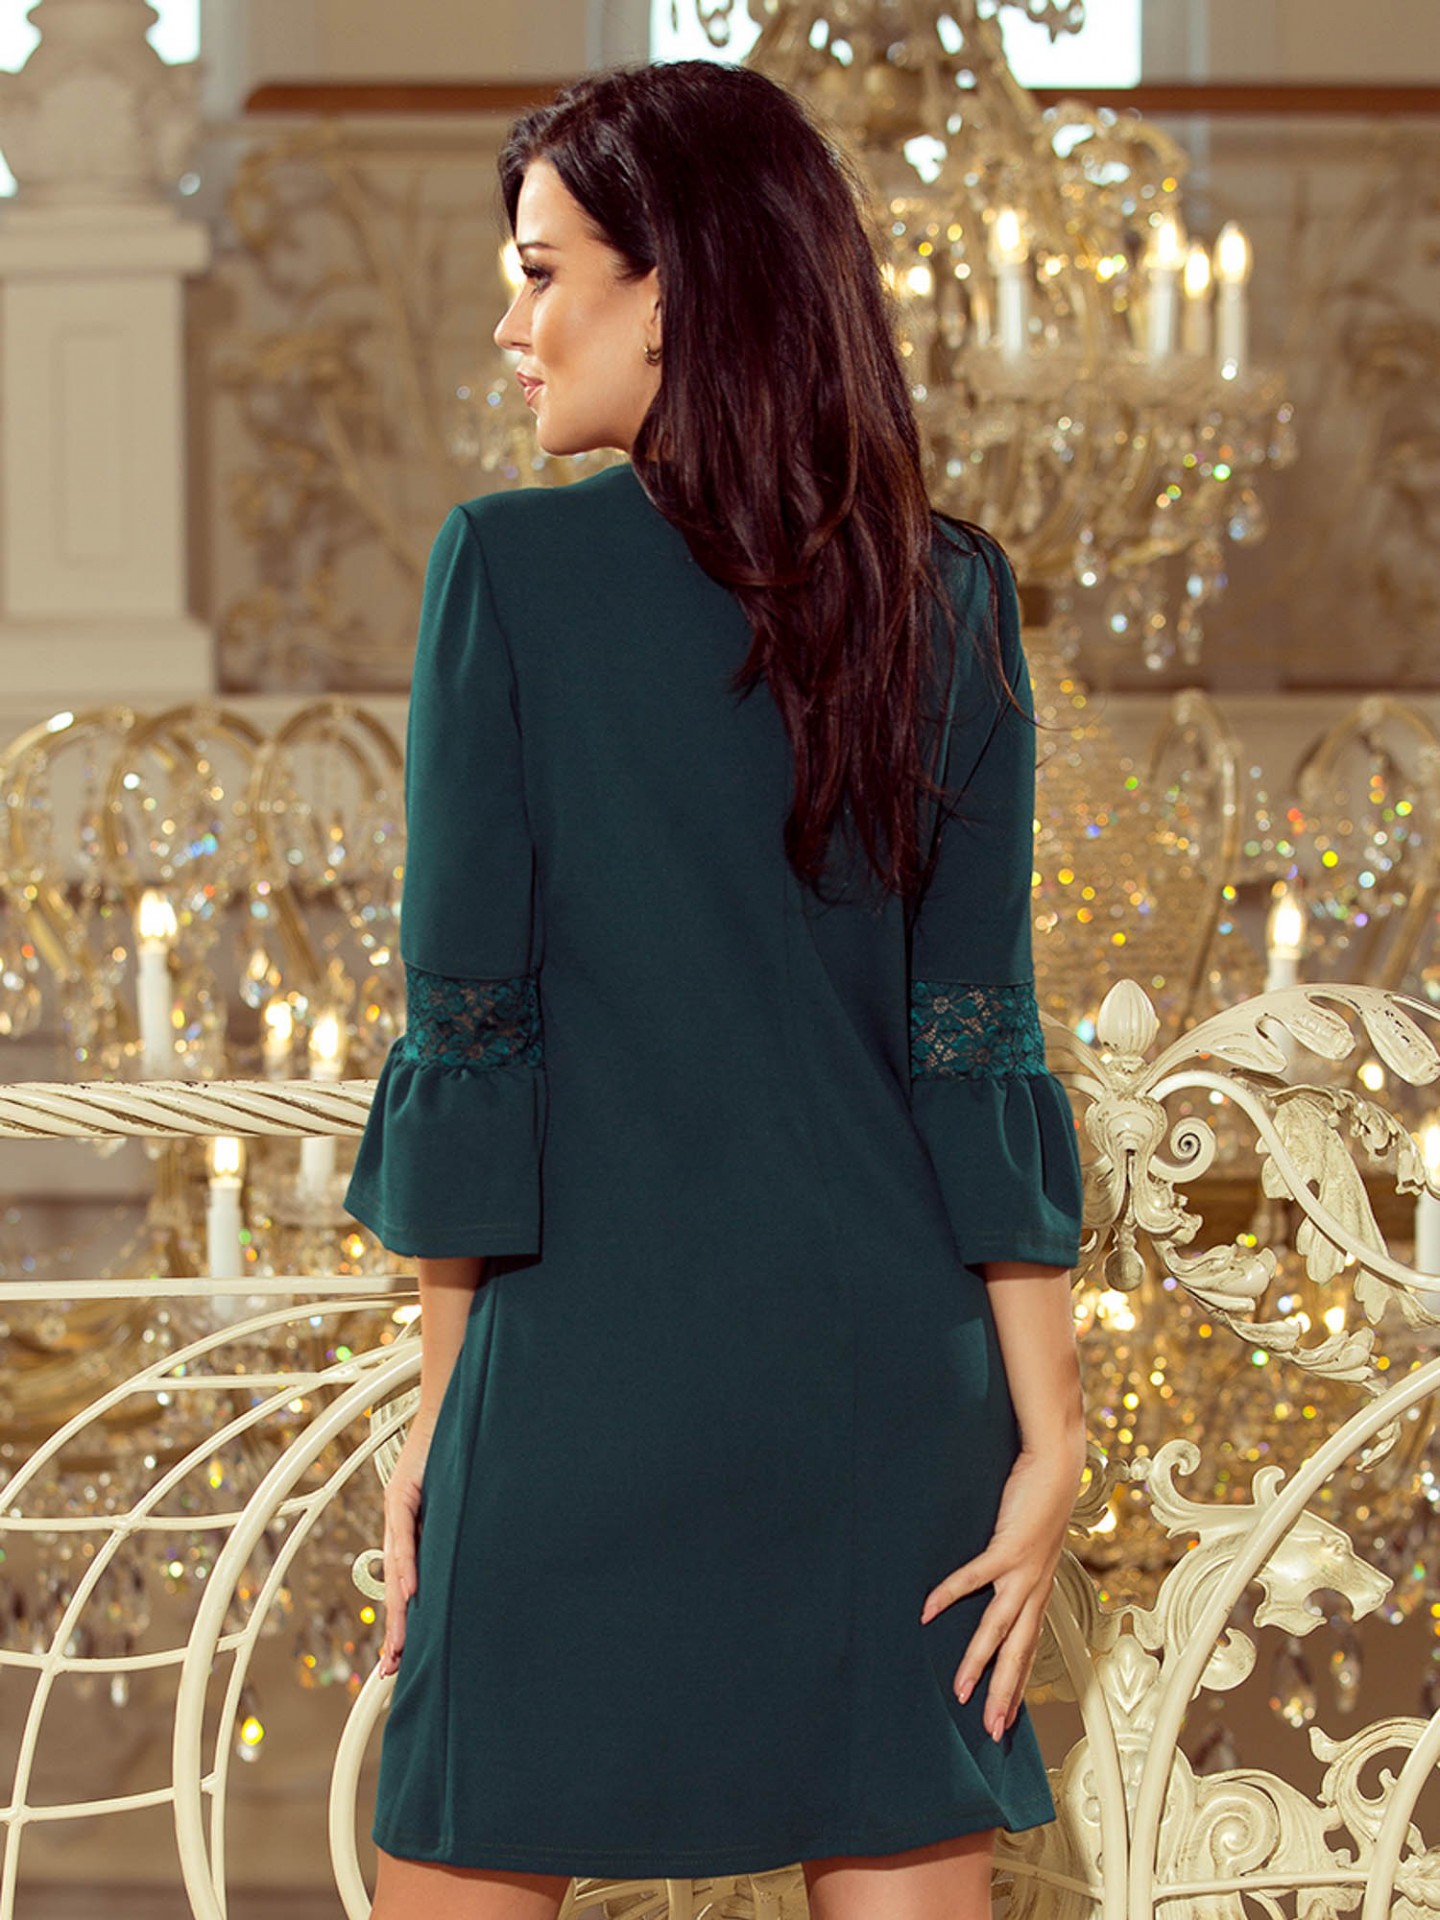 dámske šaty, šaty s rozšíreným rukávom, červené šaty, luxusné, pohodlné, praktické, elegantné, štýlové, elegantné, smaragdovo zelené šaty, zelené šaty